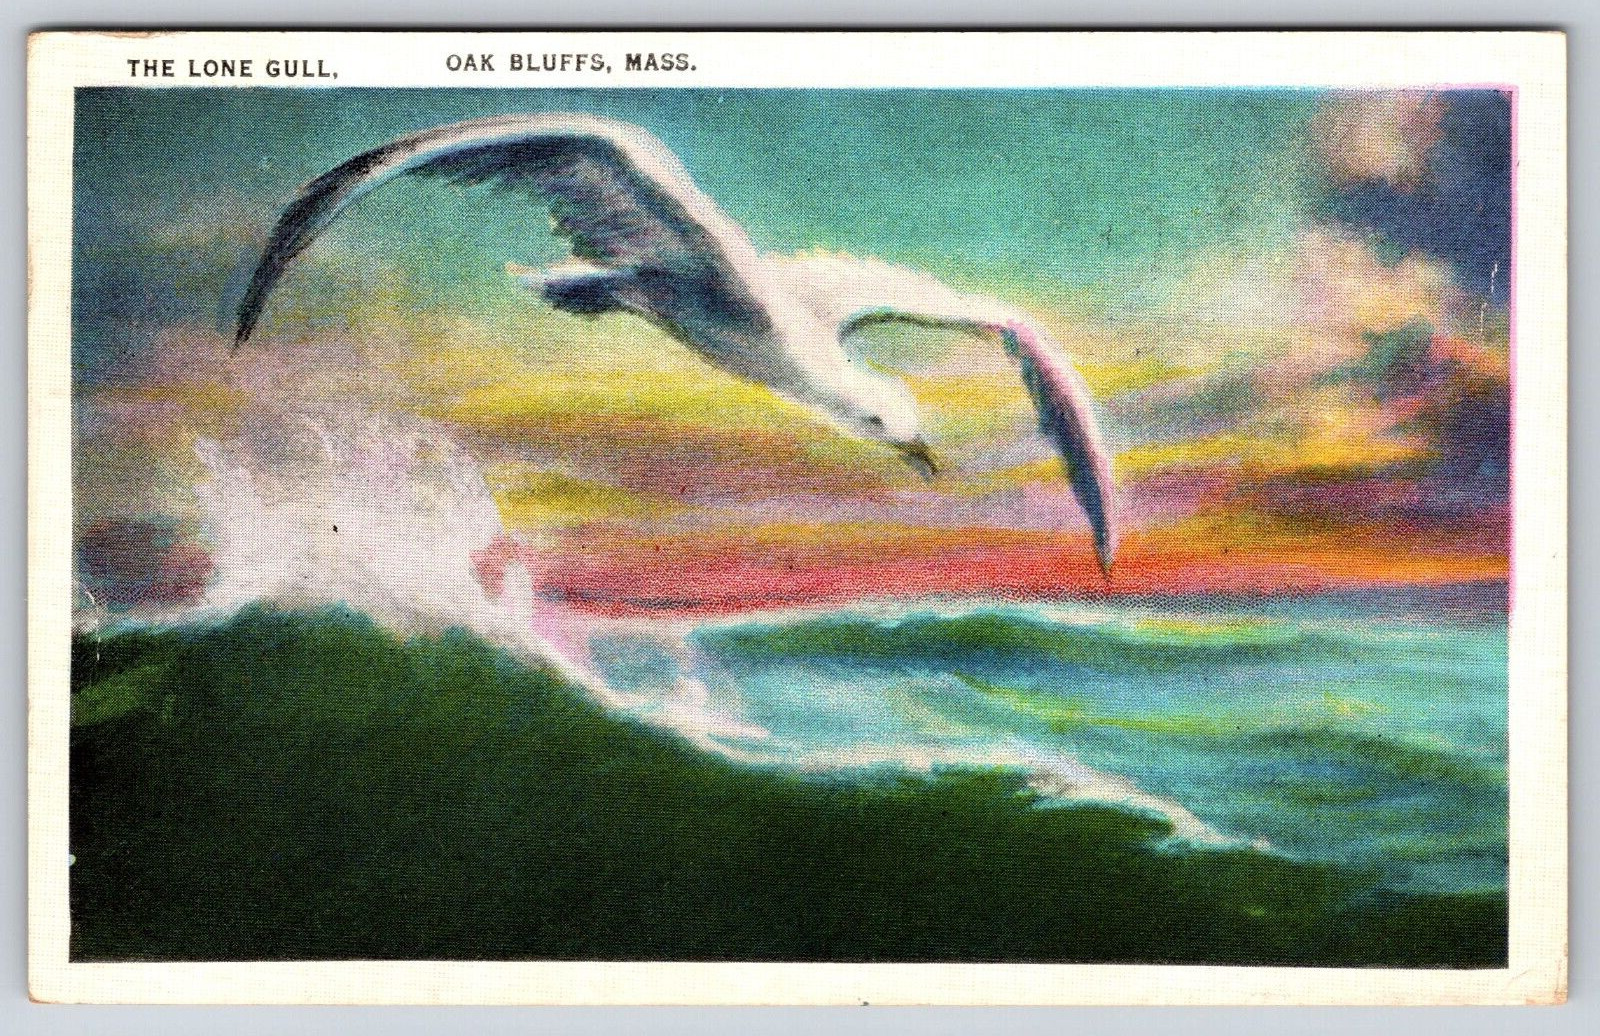 Original Old Vintage Postcard The Lone Gull Bird Oak Bluffs, Massachusetts USA